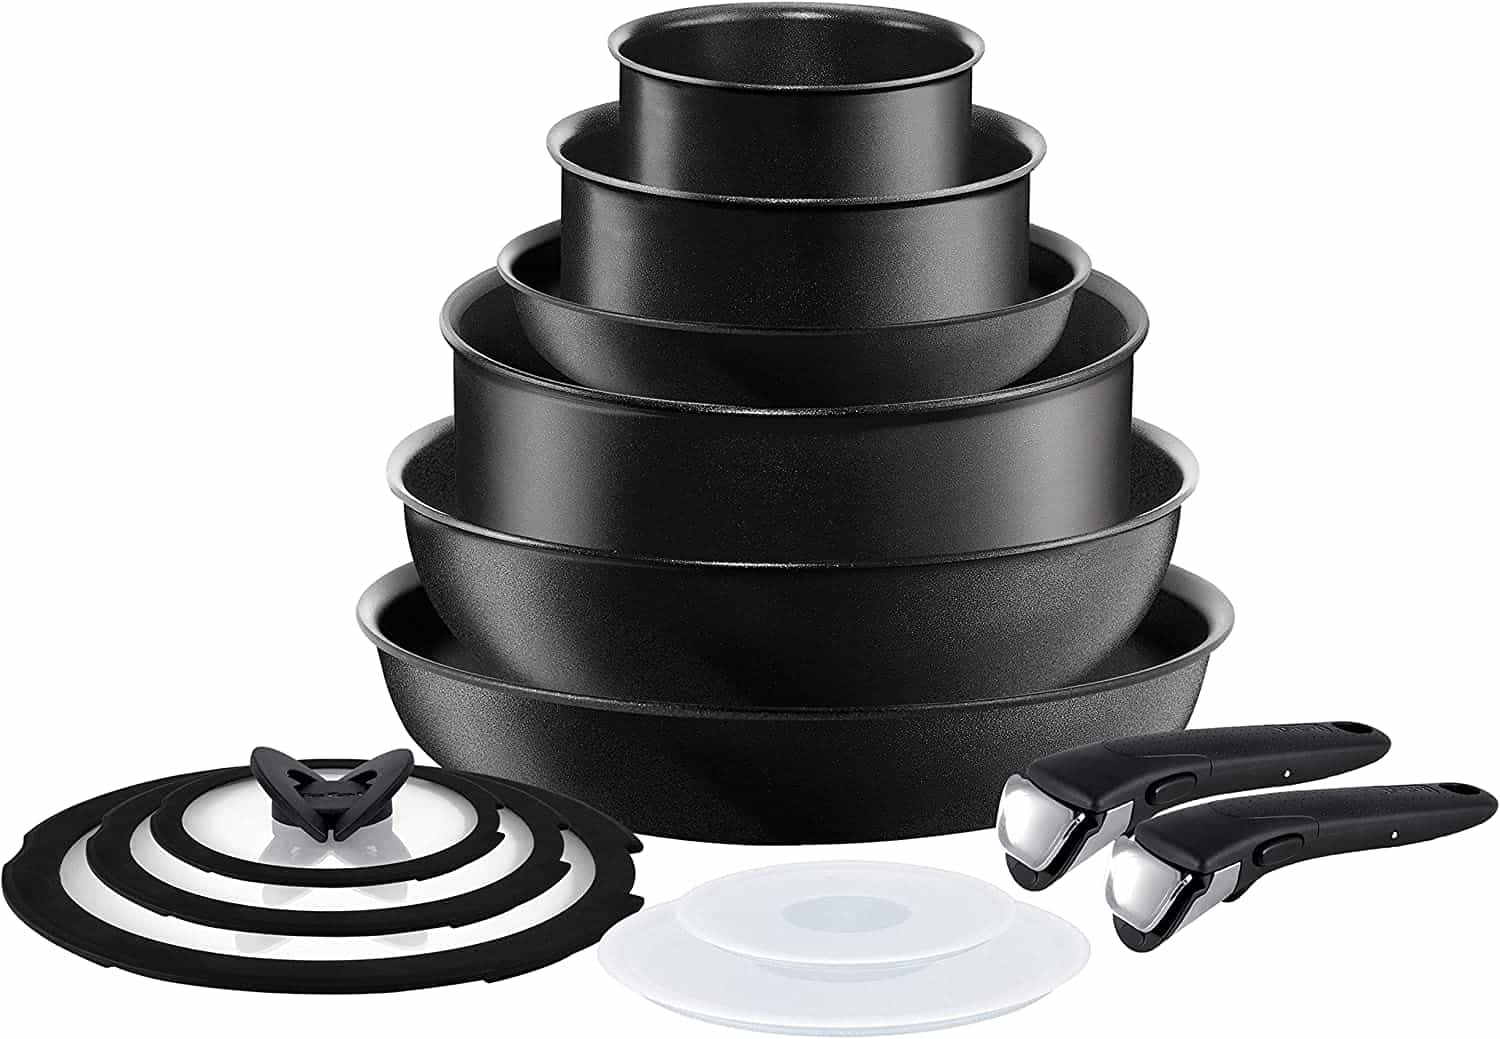 T-Fal removable handle stackable pots and pans set